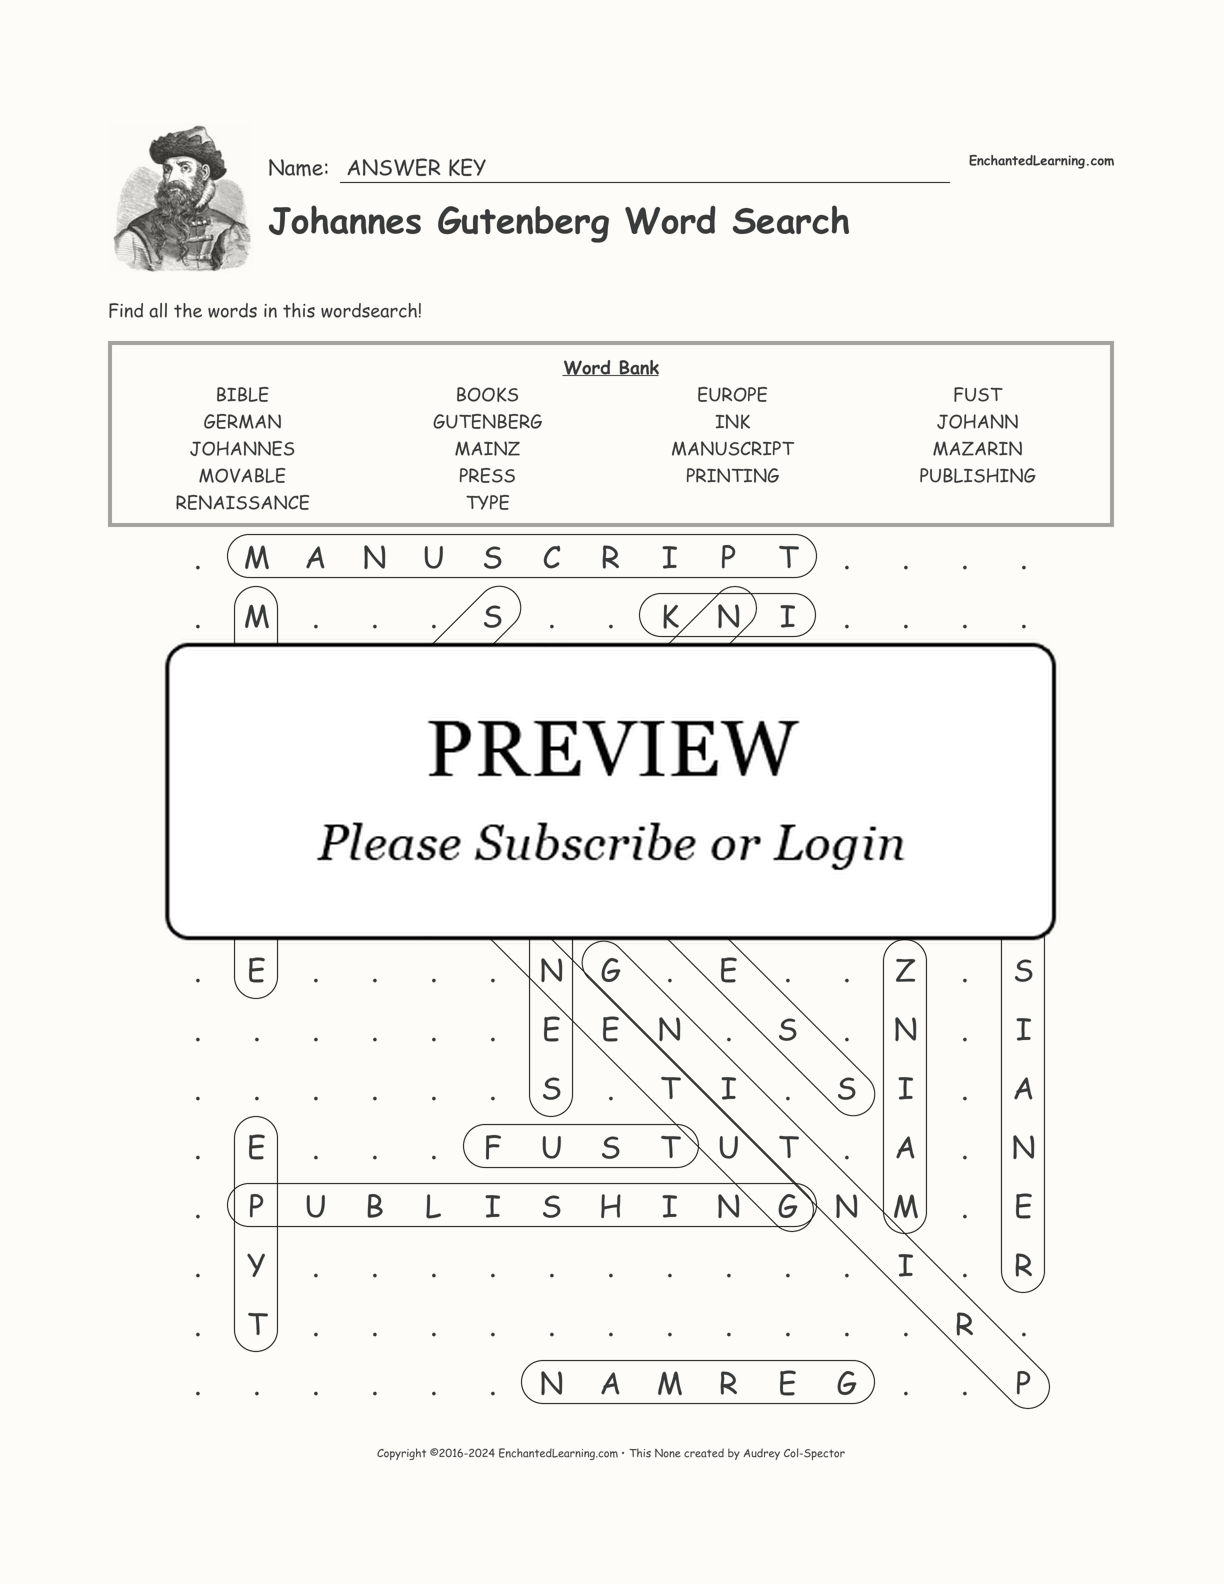 Johannes Gutenberg Word Search interactive worksheet page 2